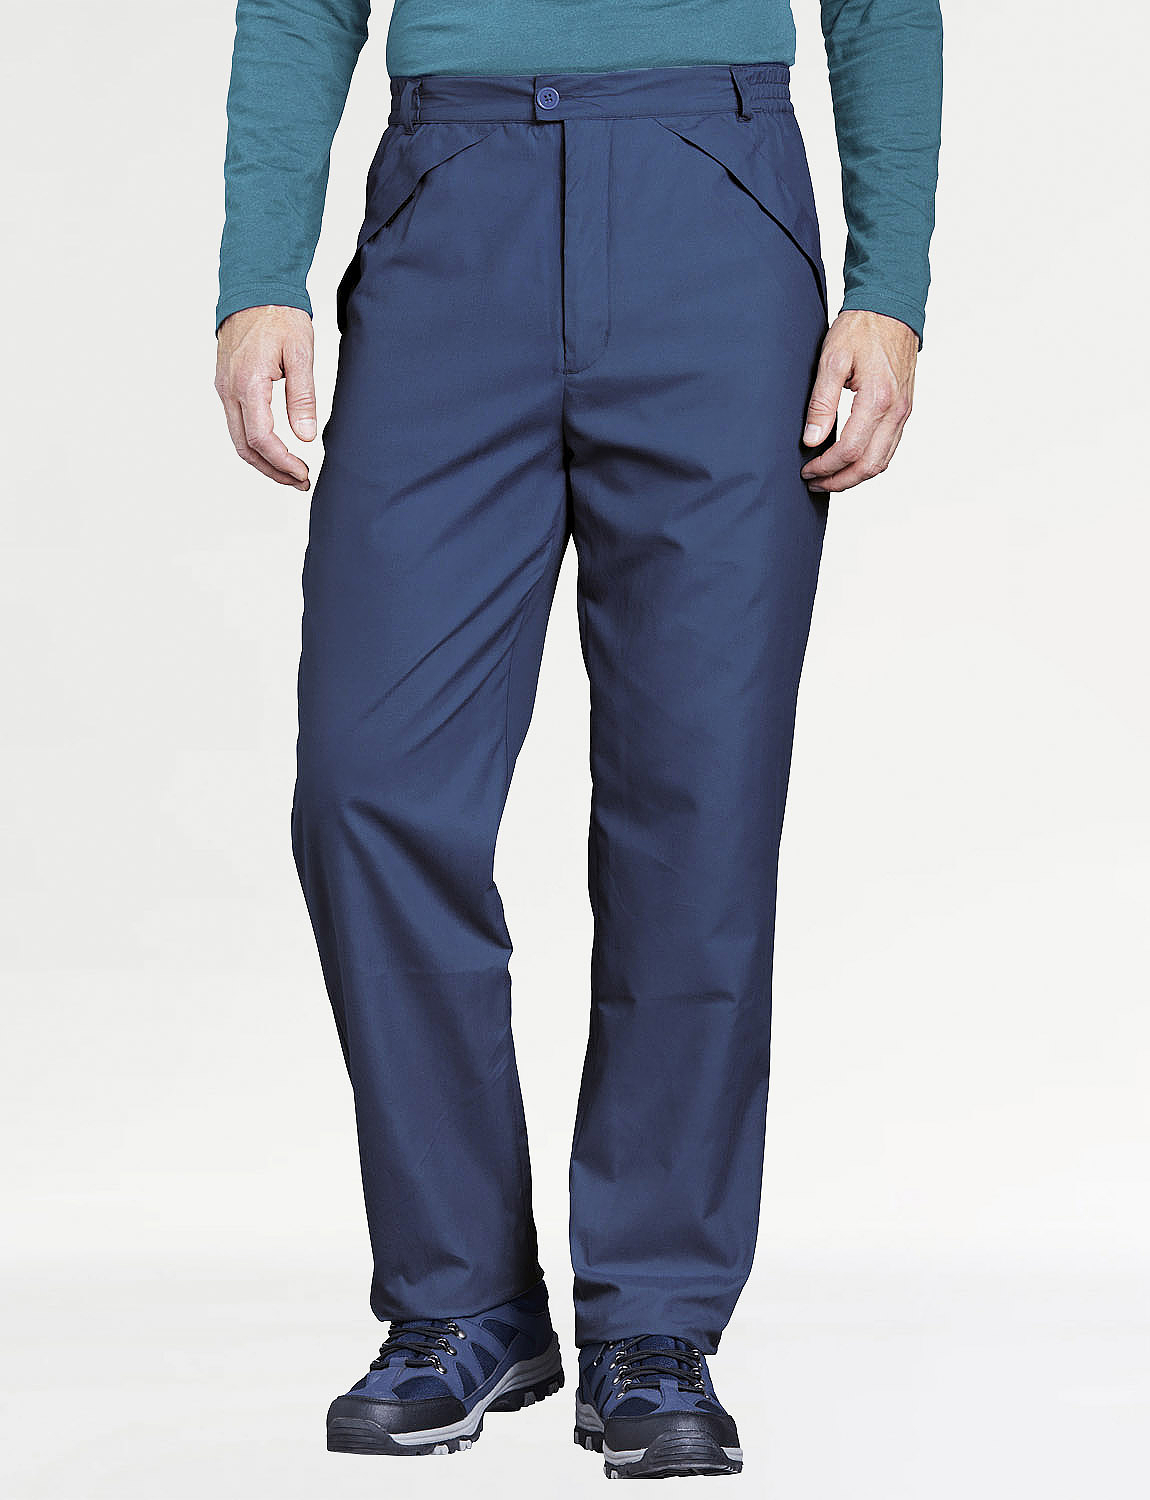 flannel lined elastic waist pants